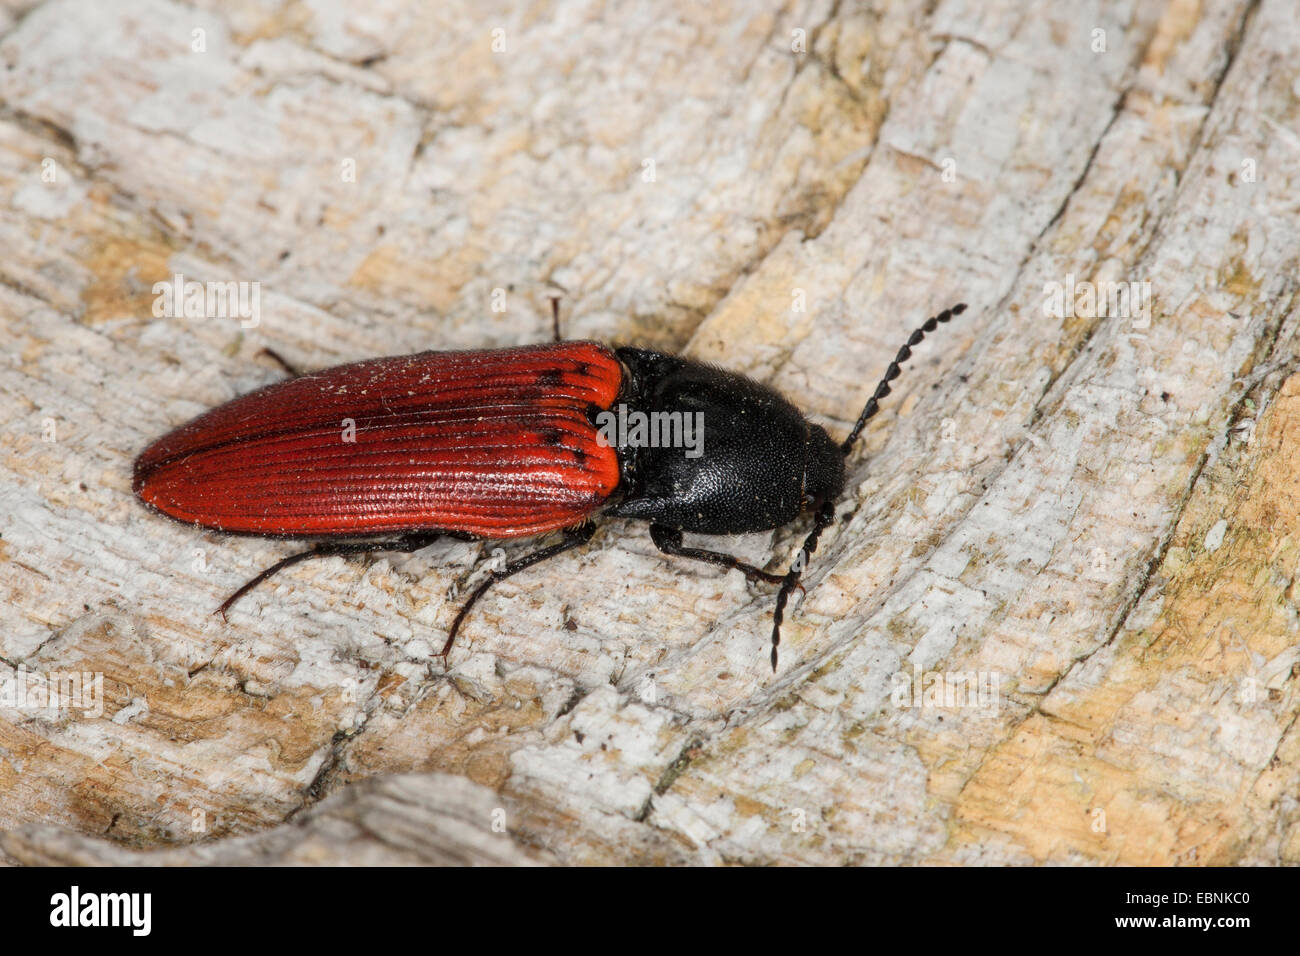 Cardinal click beetle (Ampedus spec., Ampedus cf. sanguineus), on deadwood, Germany Stock Photo